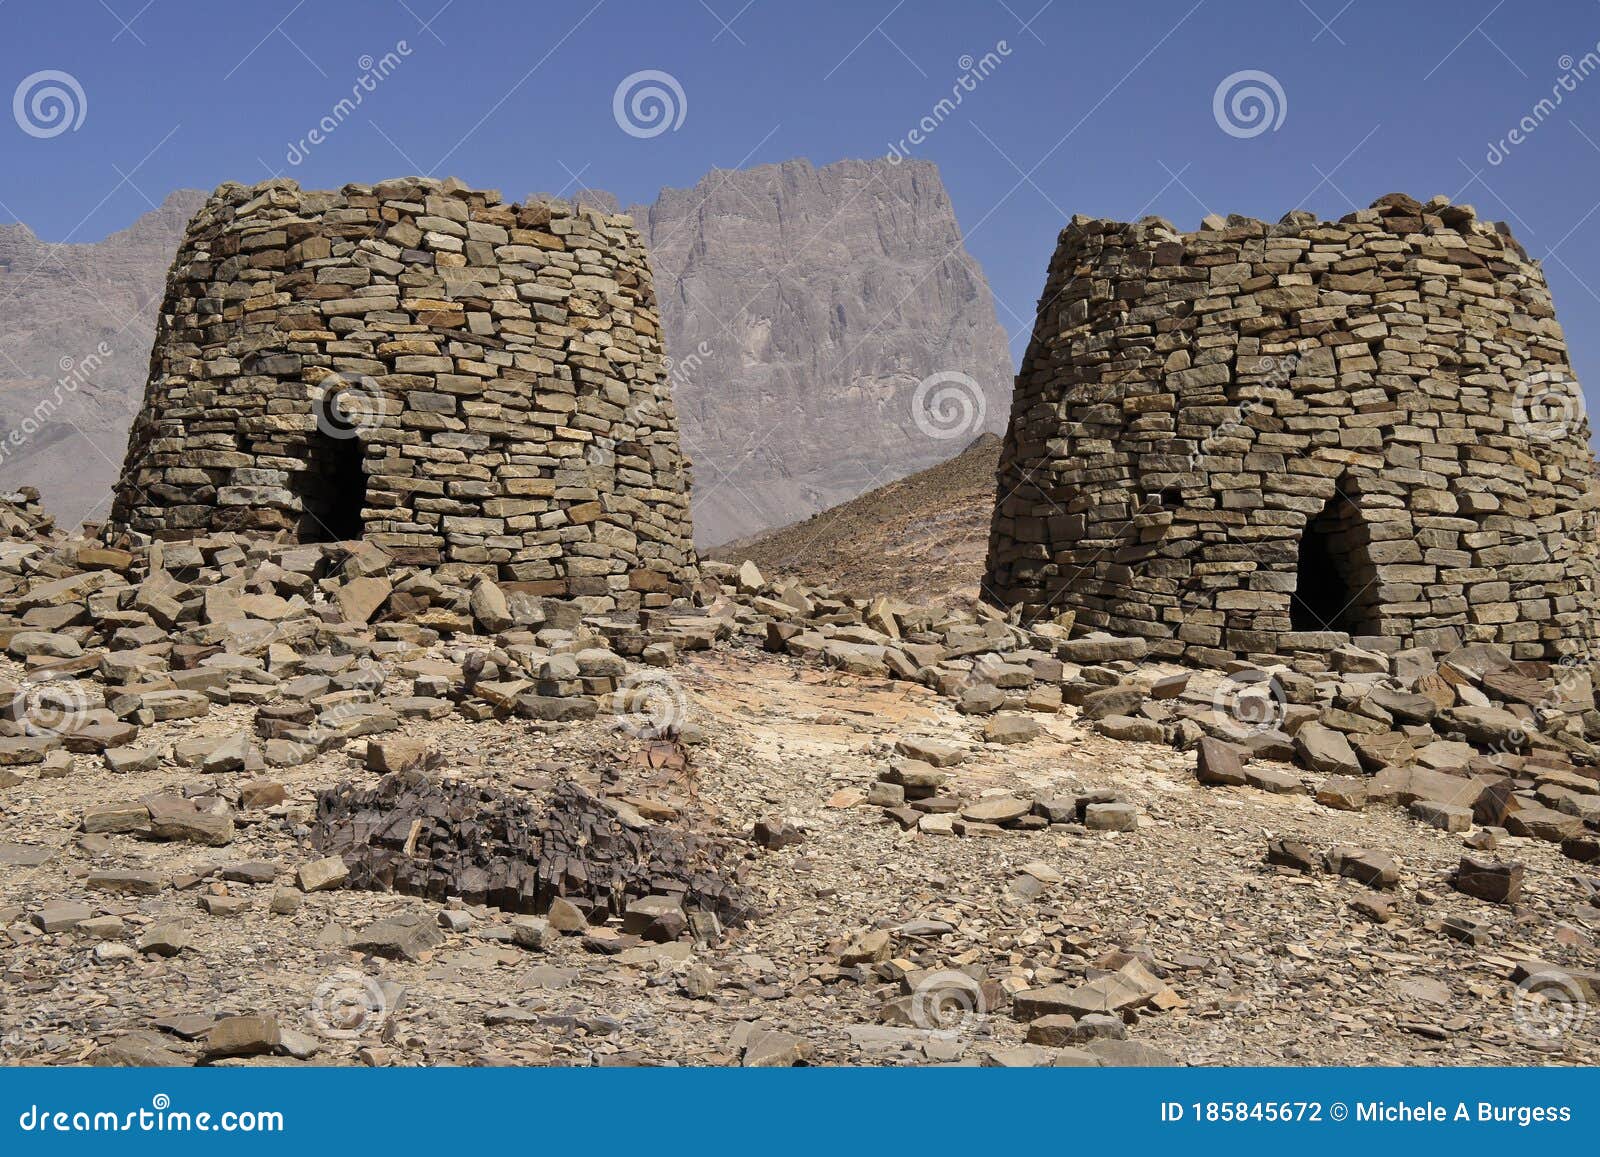 beehive tombs at al-ayn, oman